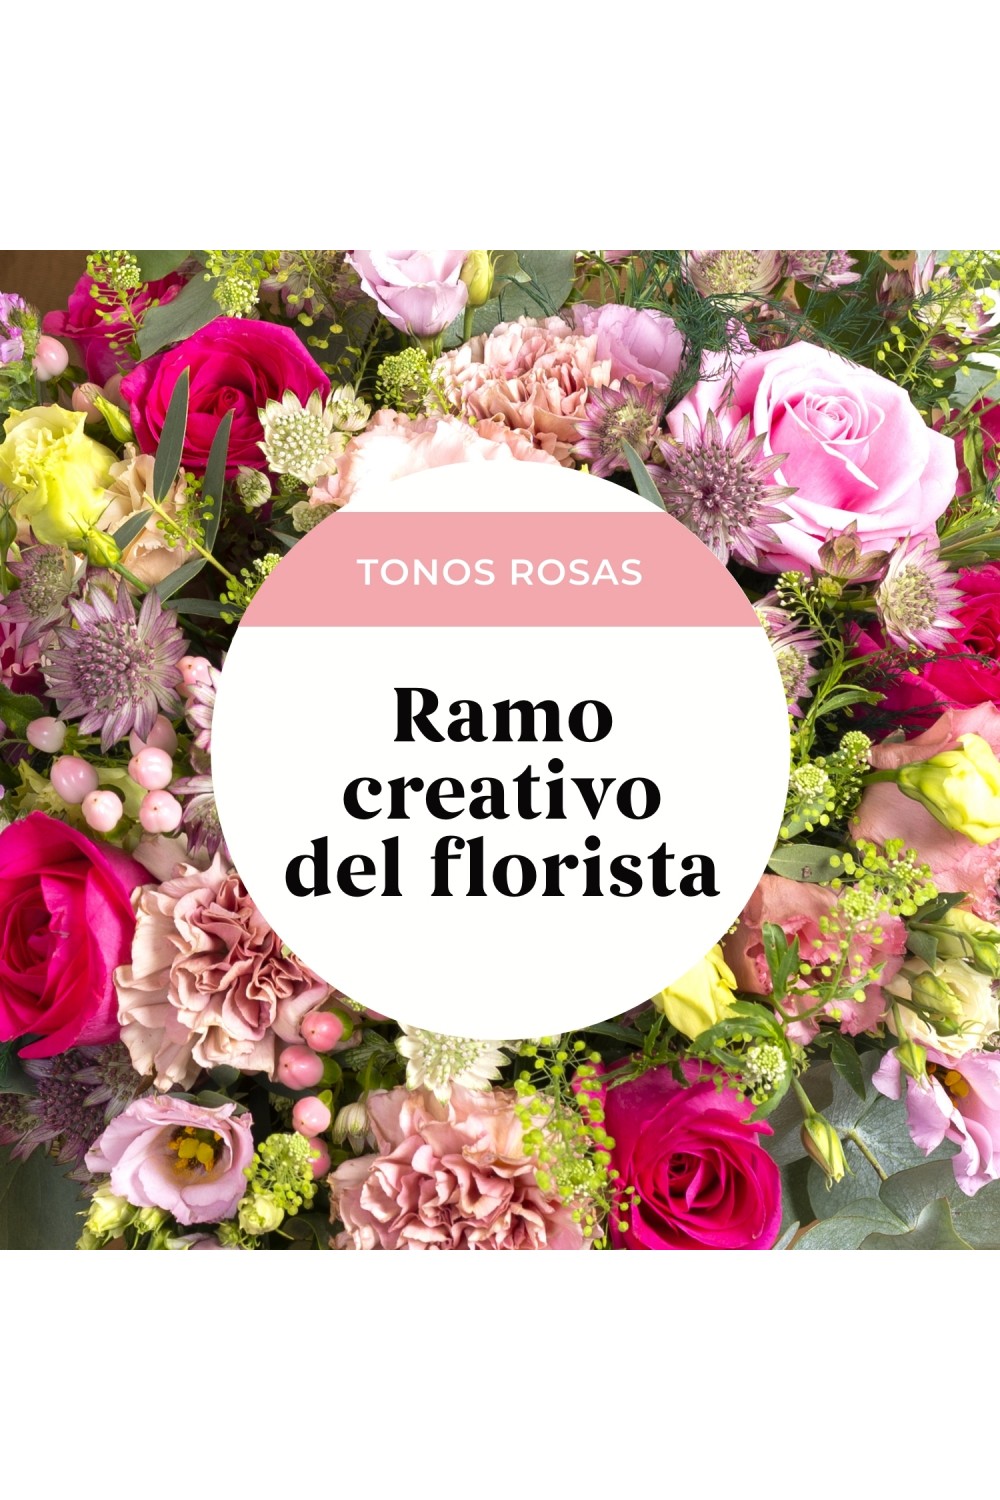 Enviar flores - Ramo de flores en tonos rosas - Interflora